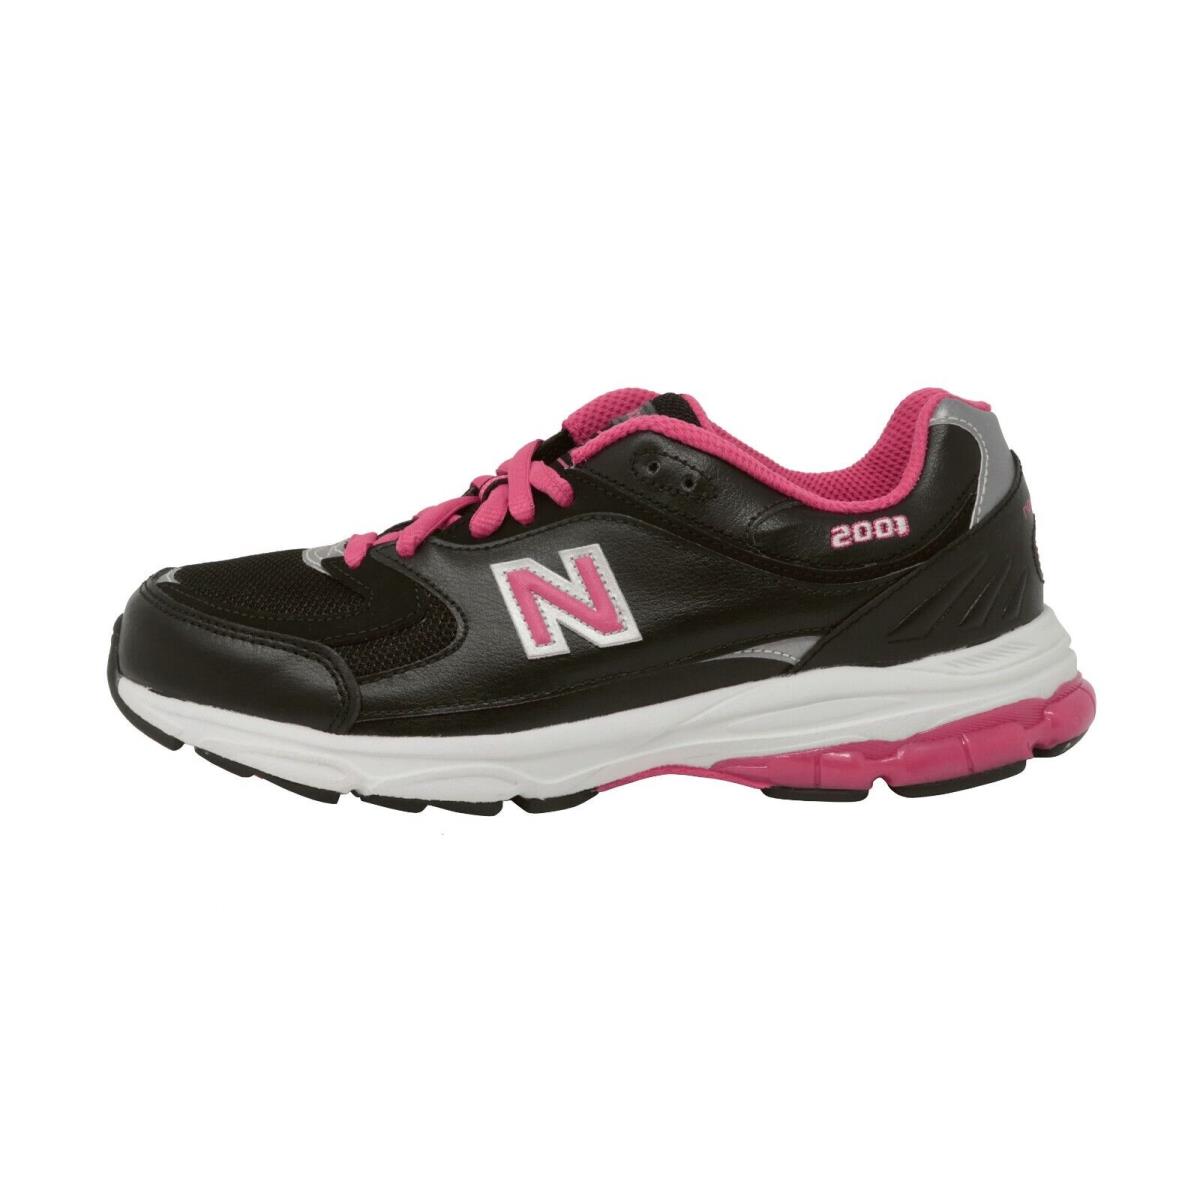 New Balance Classic Big Kids Running Shoes Sneakers K2001BPG - Black/pink